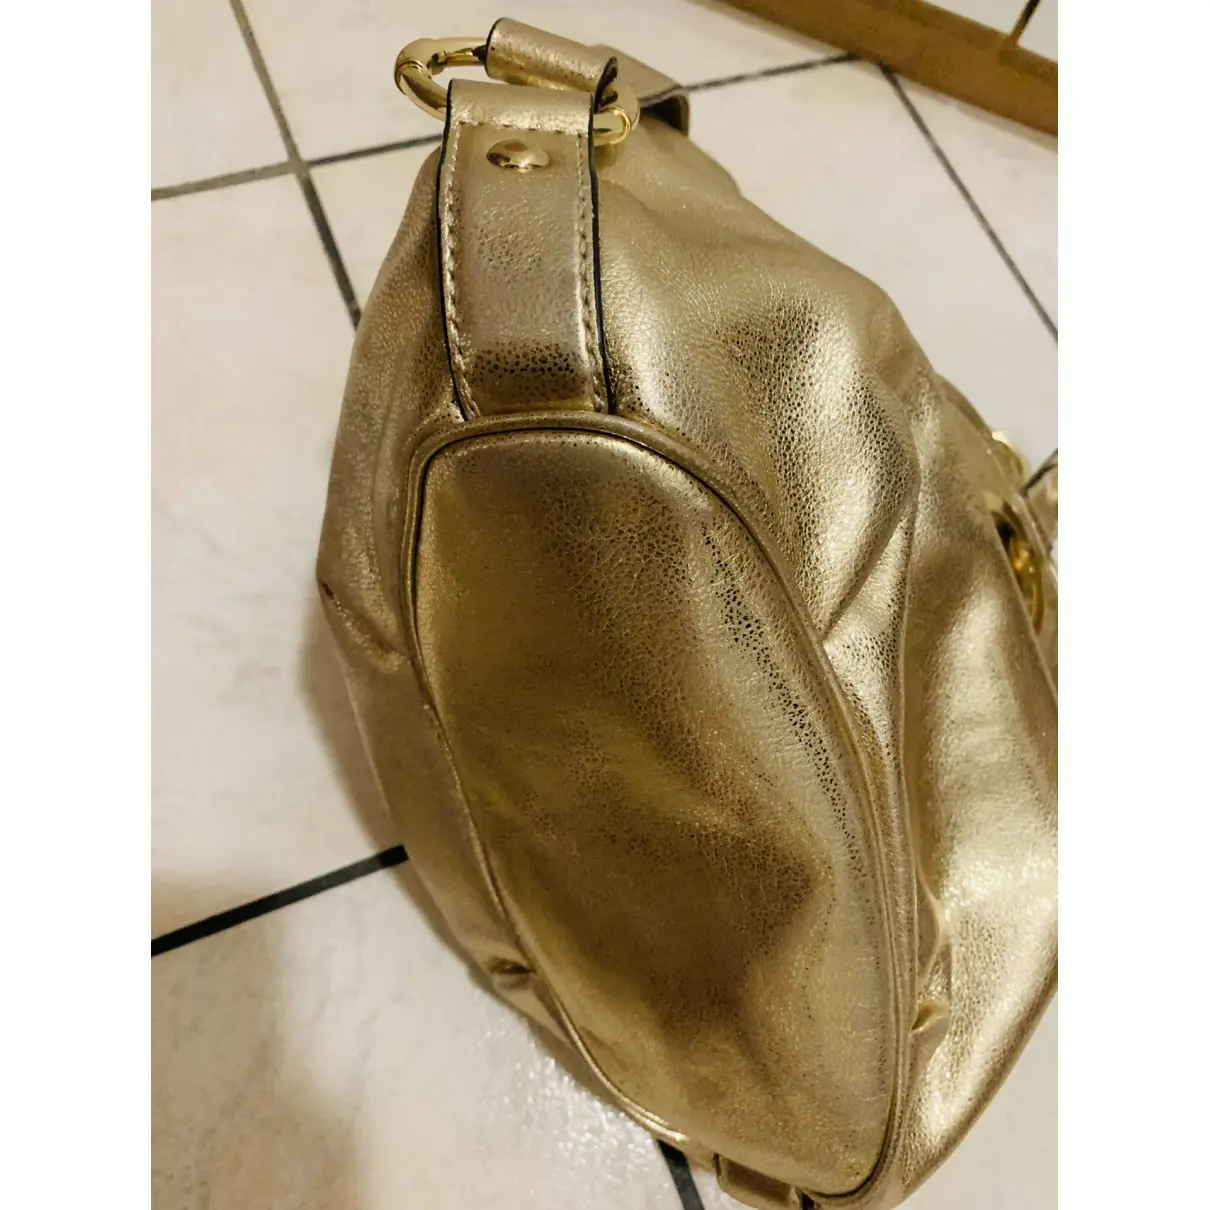 Buy Michael Kors Vegan leather handbag online